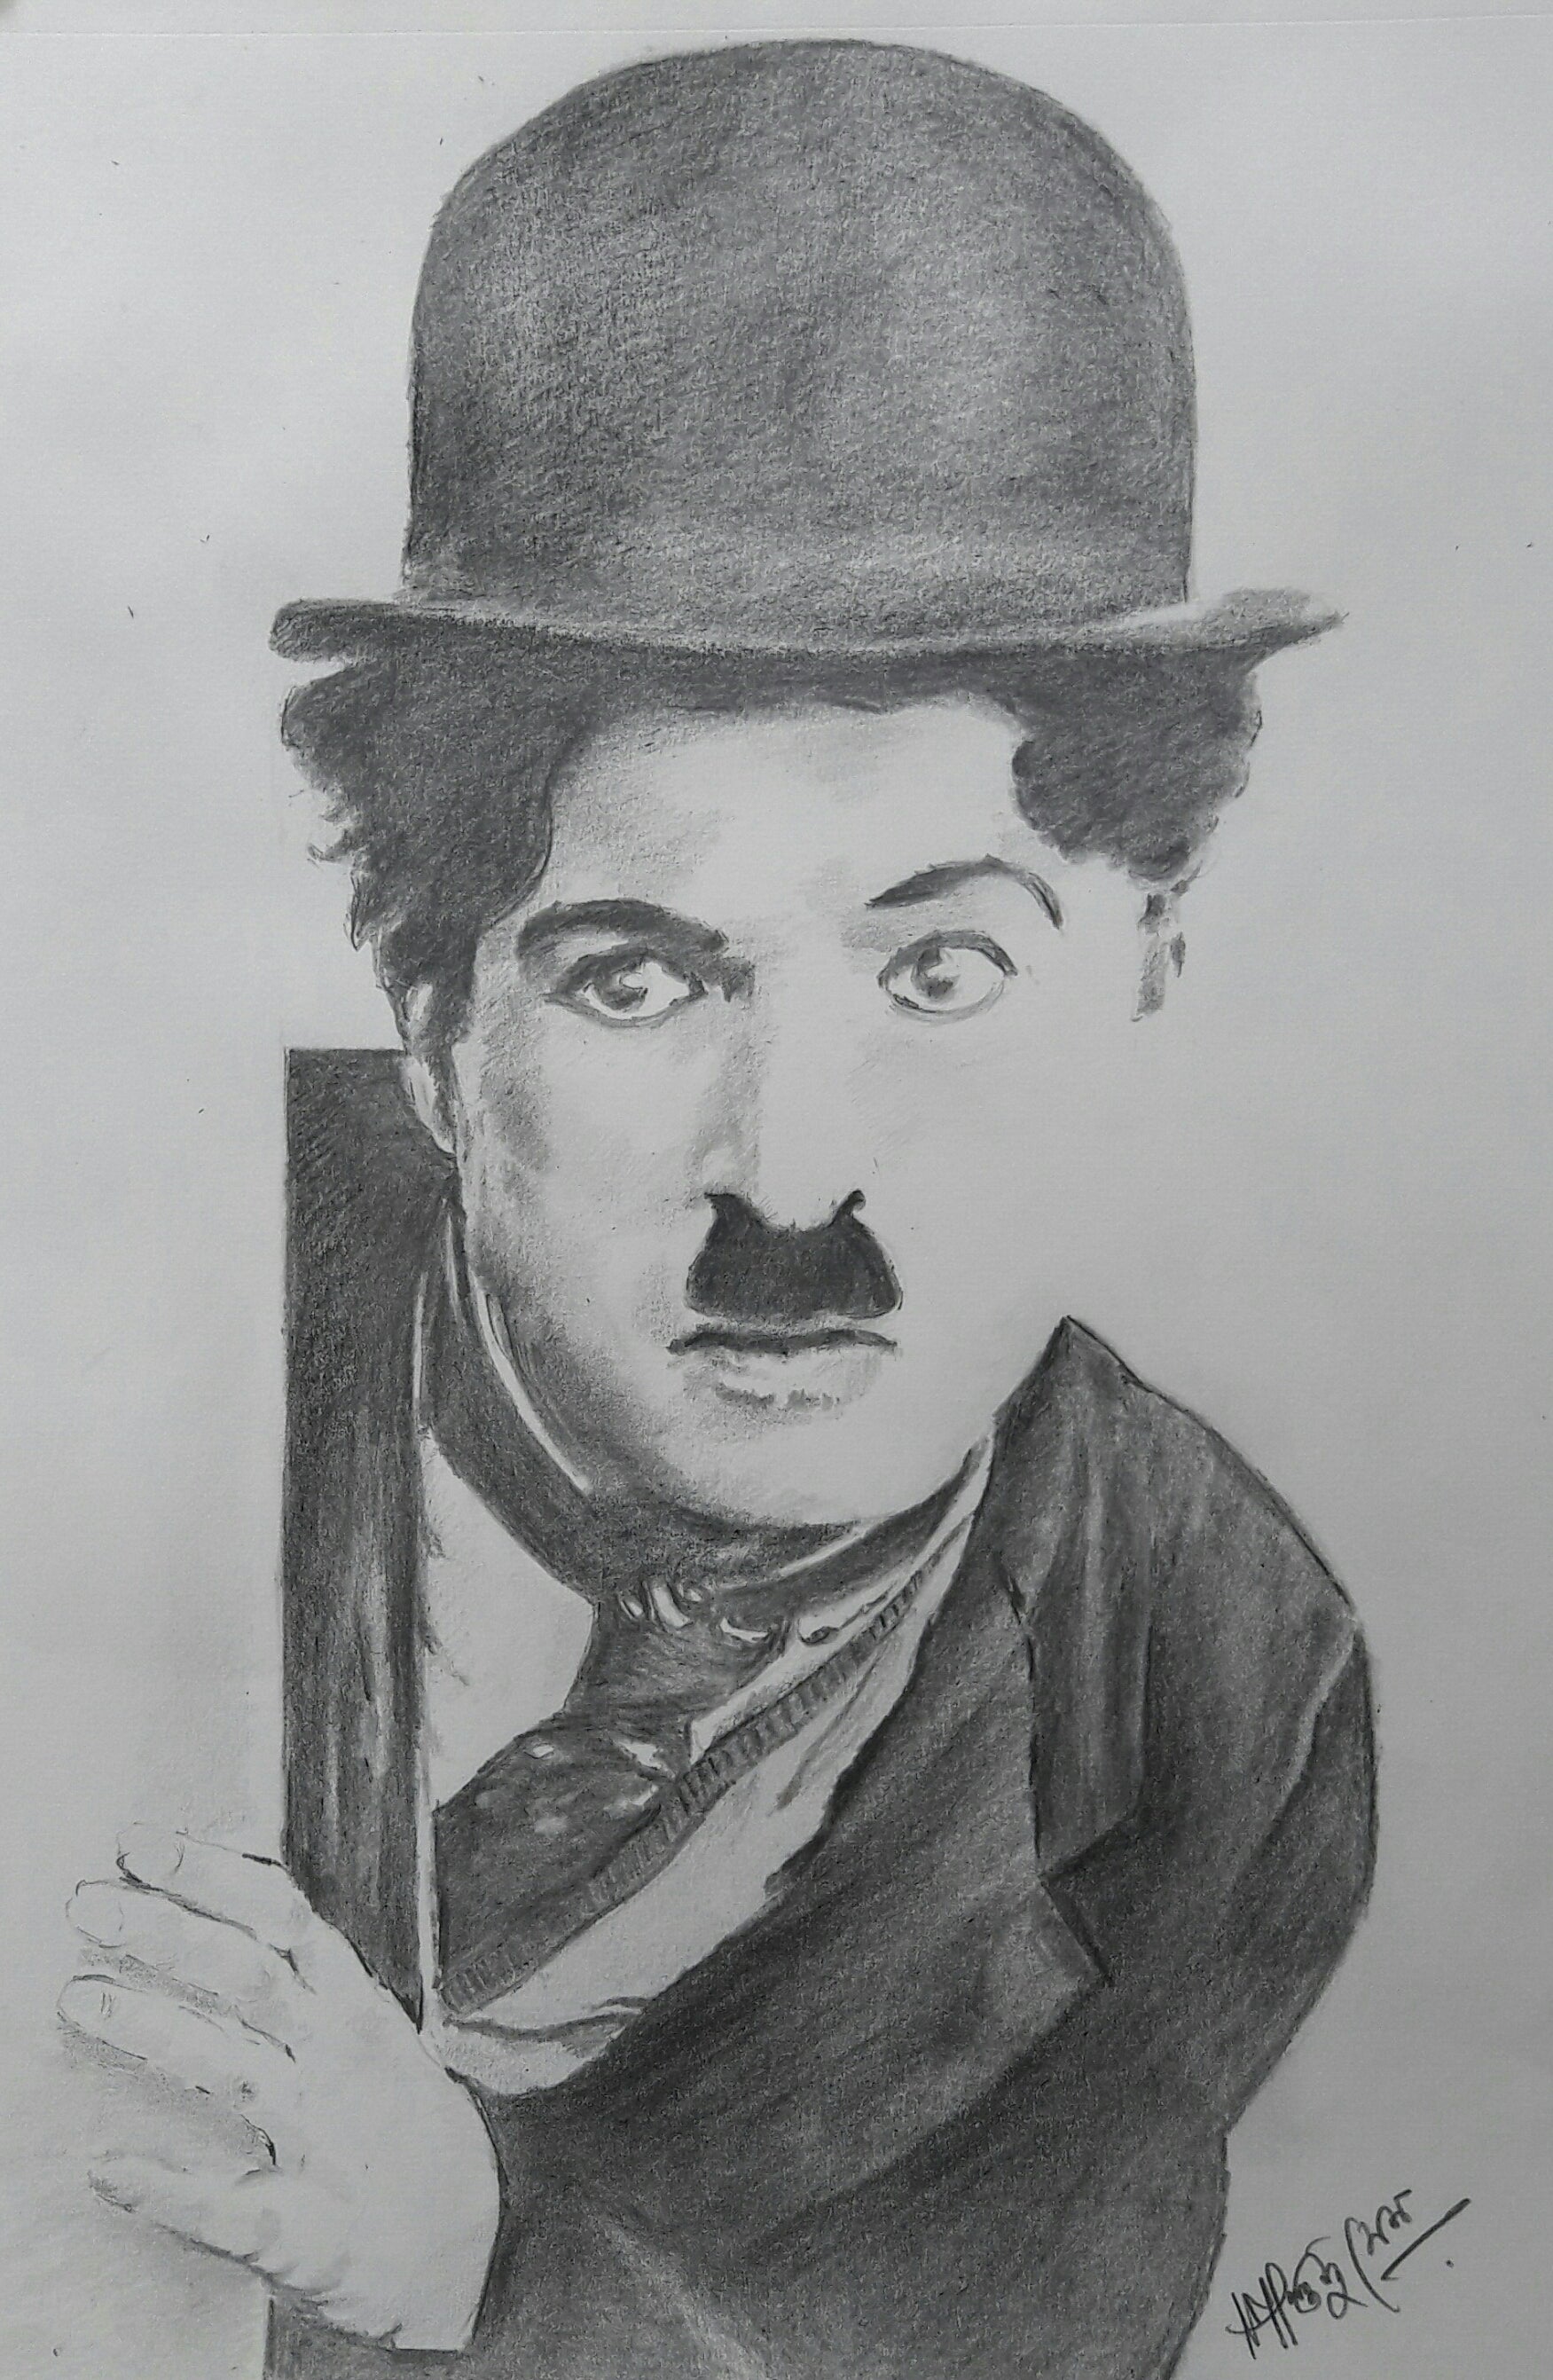 Buy Pencil Sketch Charlie Chaplin Artwork at Lowest Price By Santanu Sen